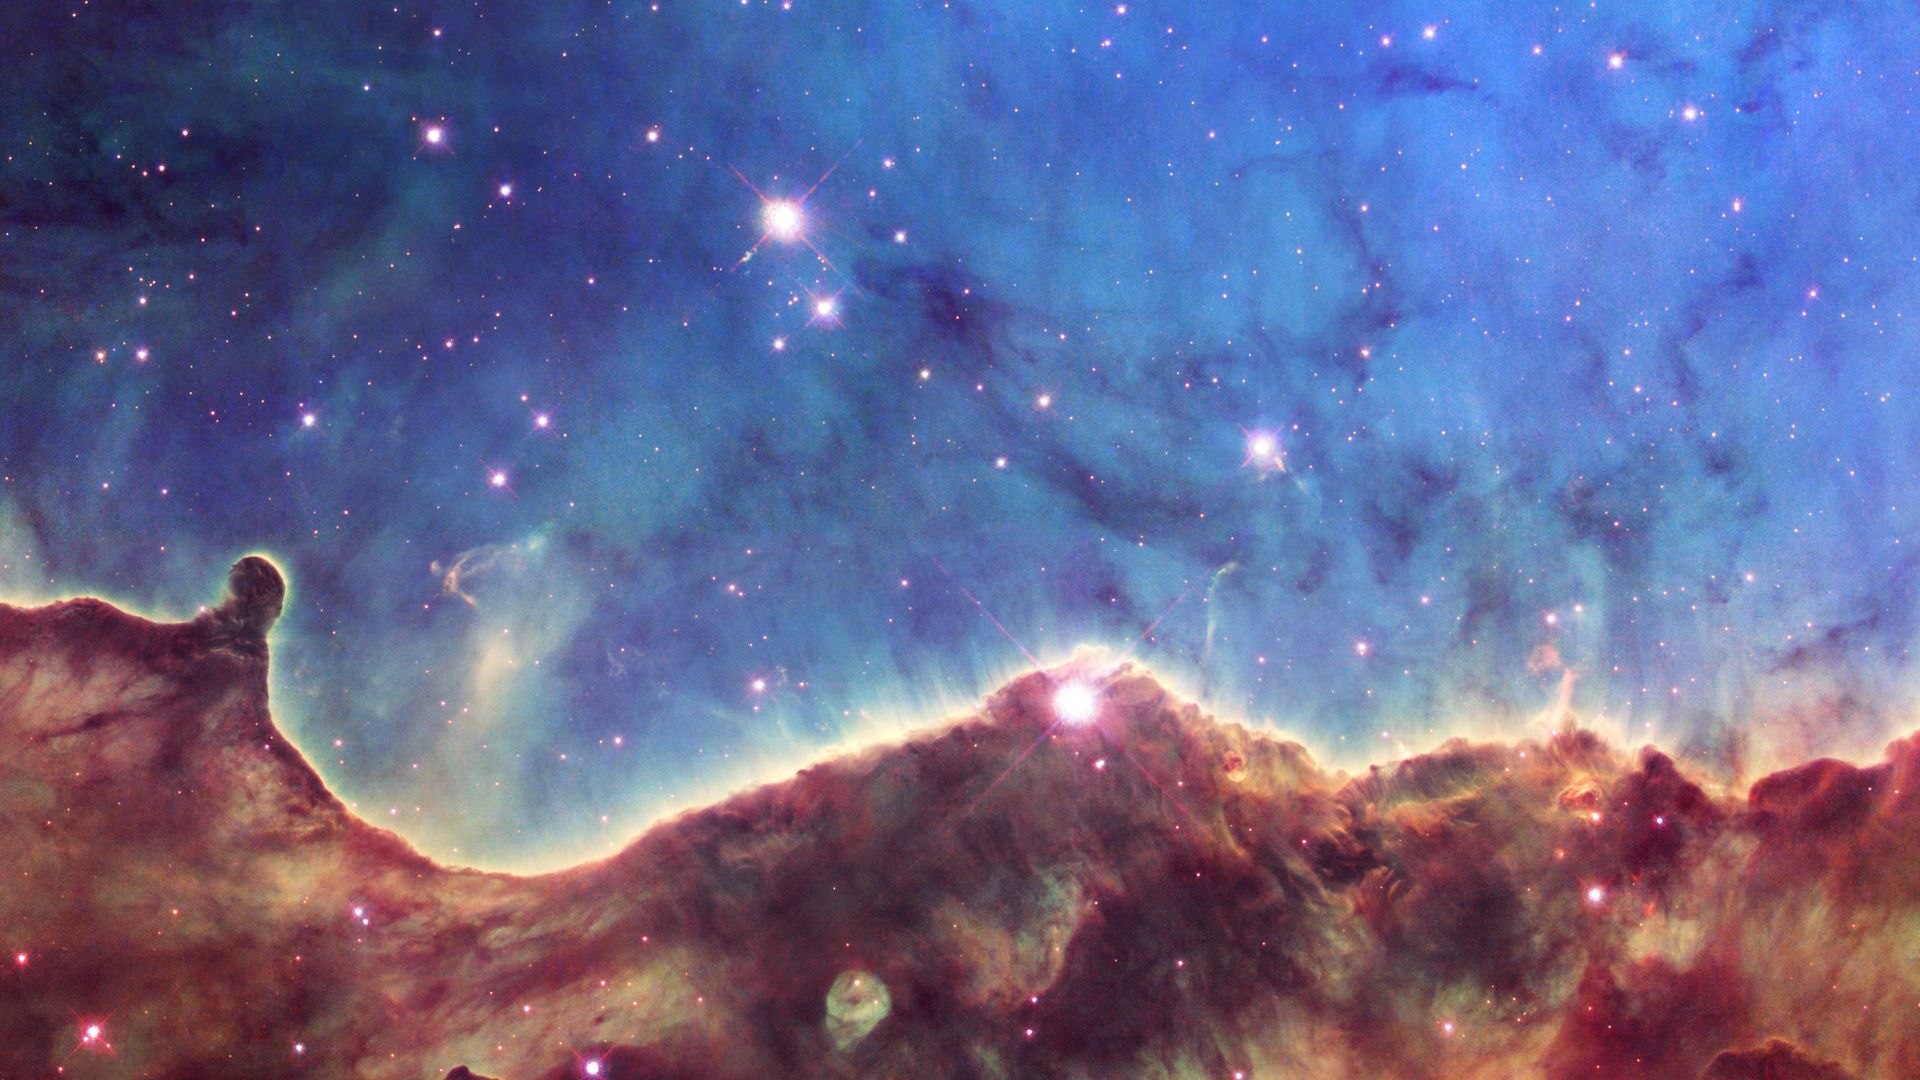 Hubble cosmic cliffs at 1920x1080